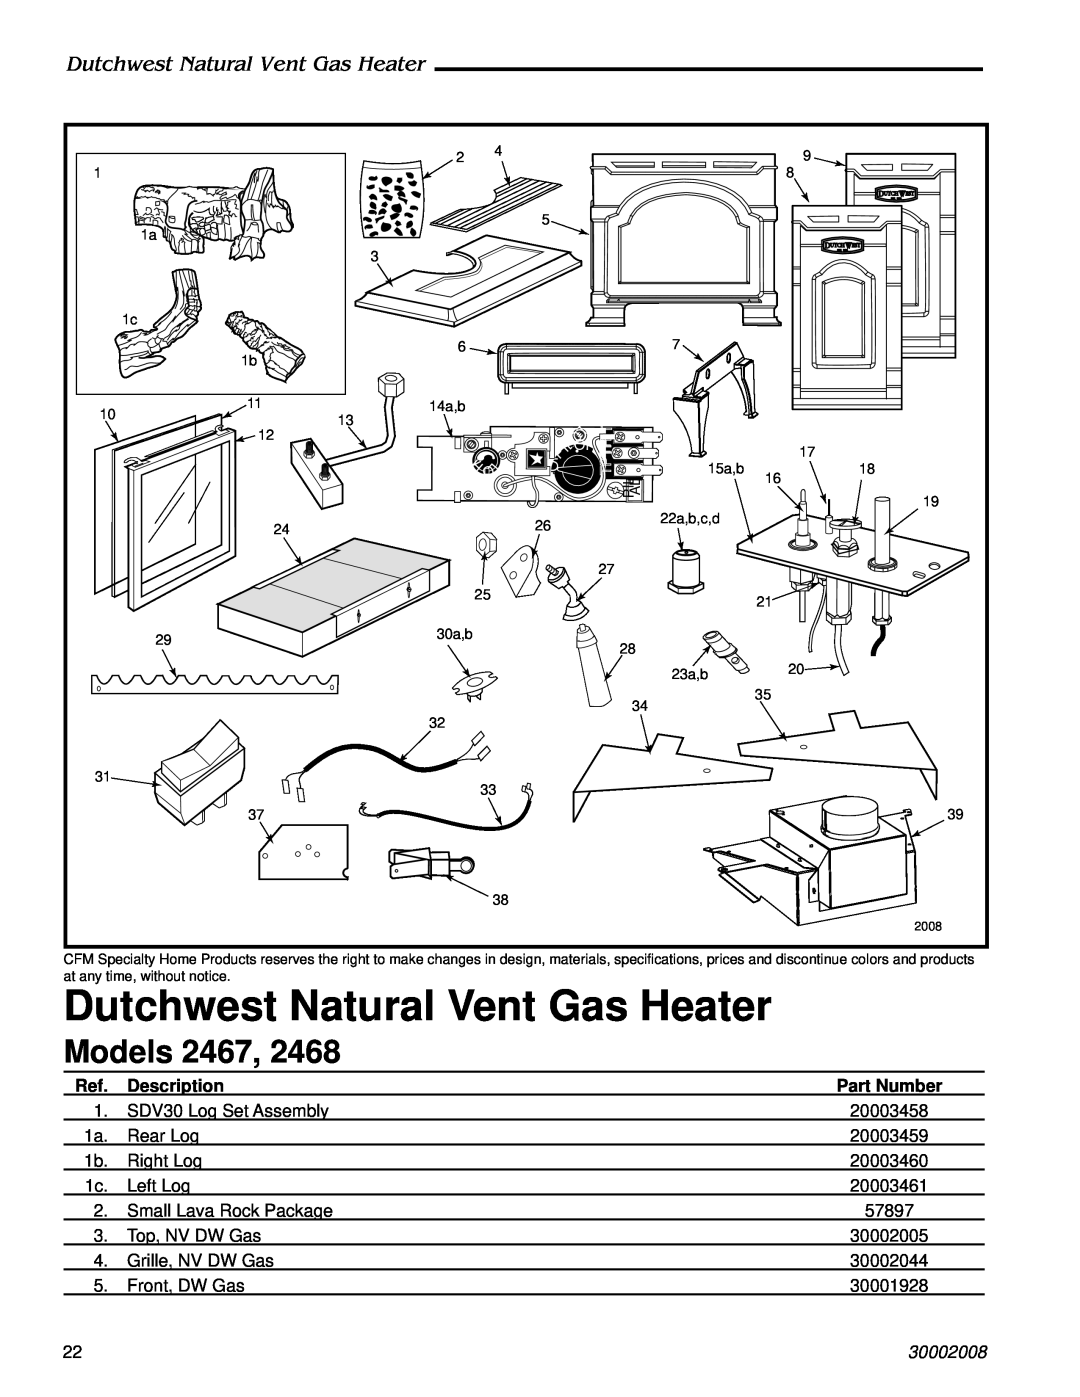 CFM Corporation 2467, 2468 manual Models, Dutchwest Natural Vent Gas Heater, 30002008 